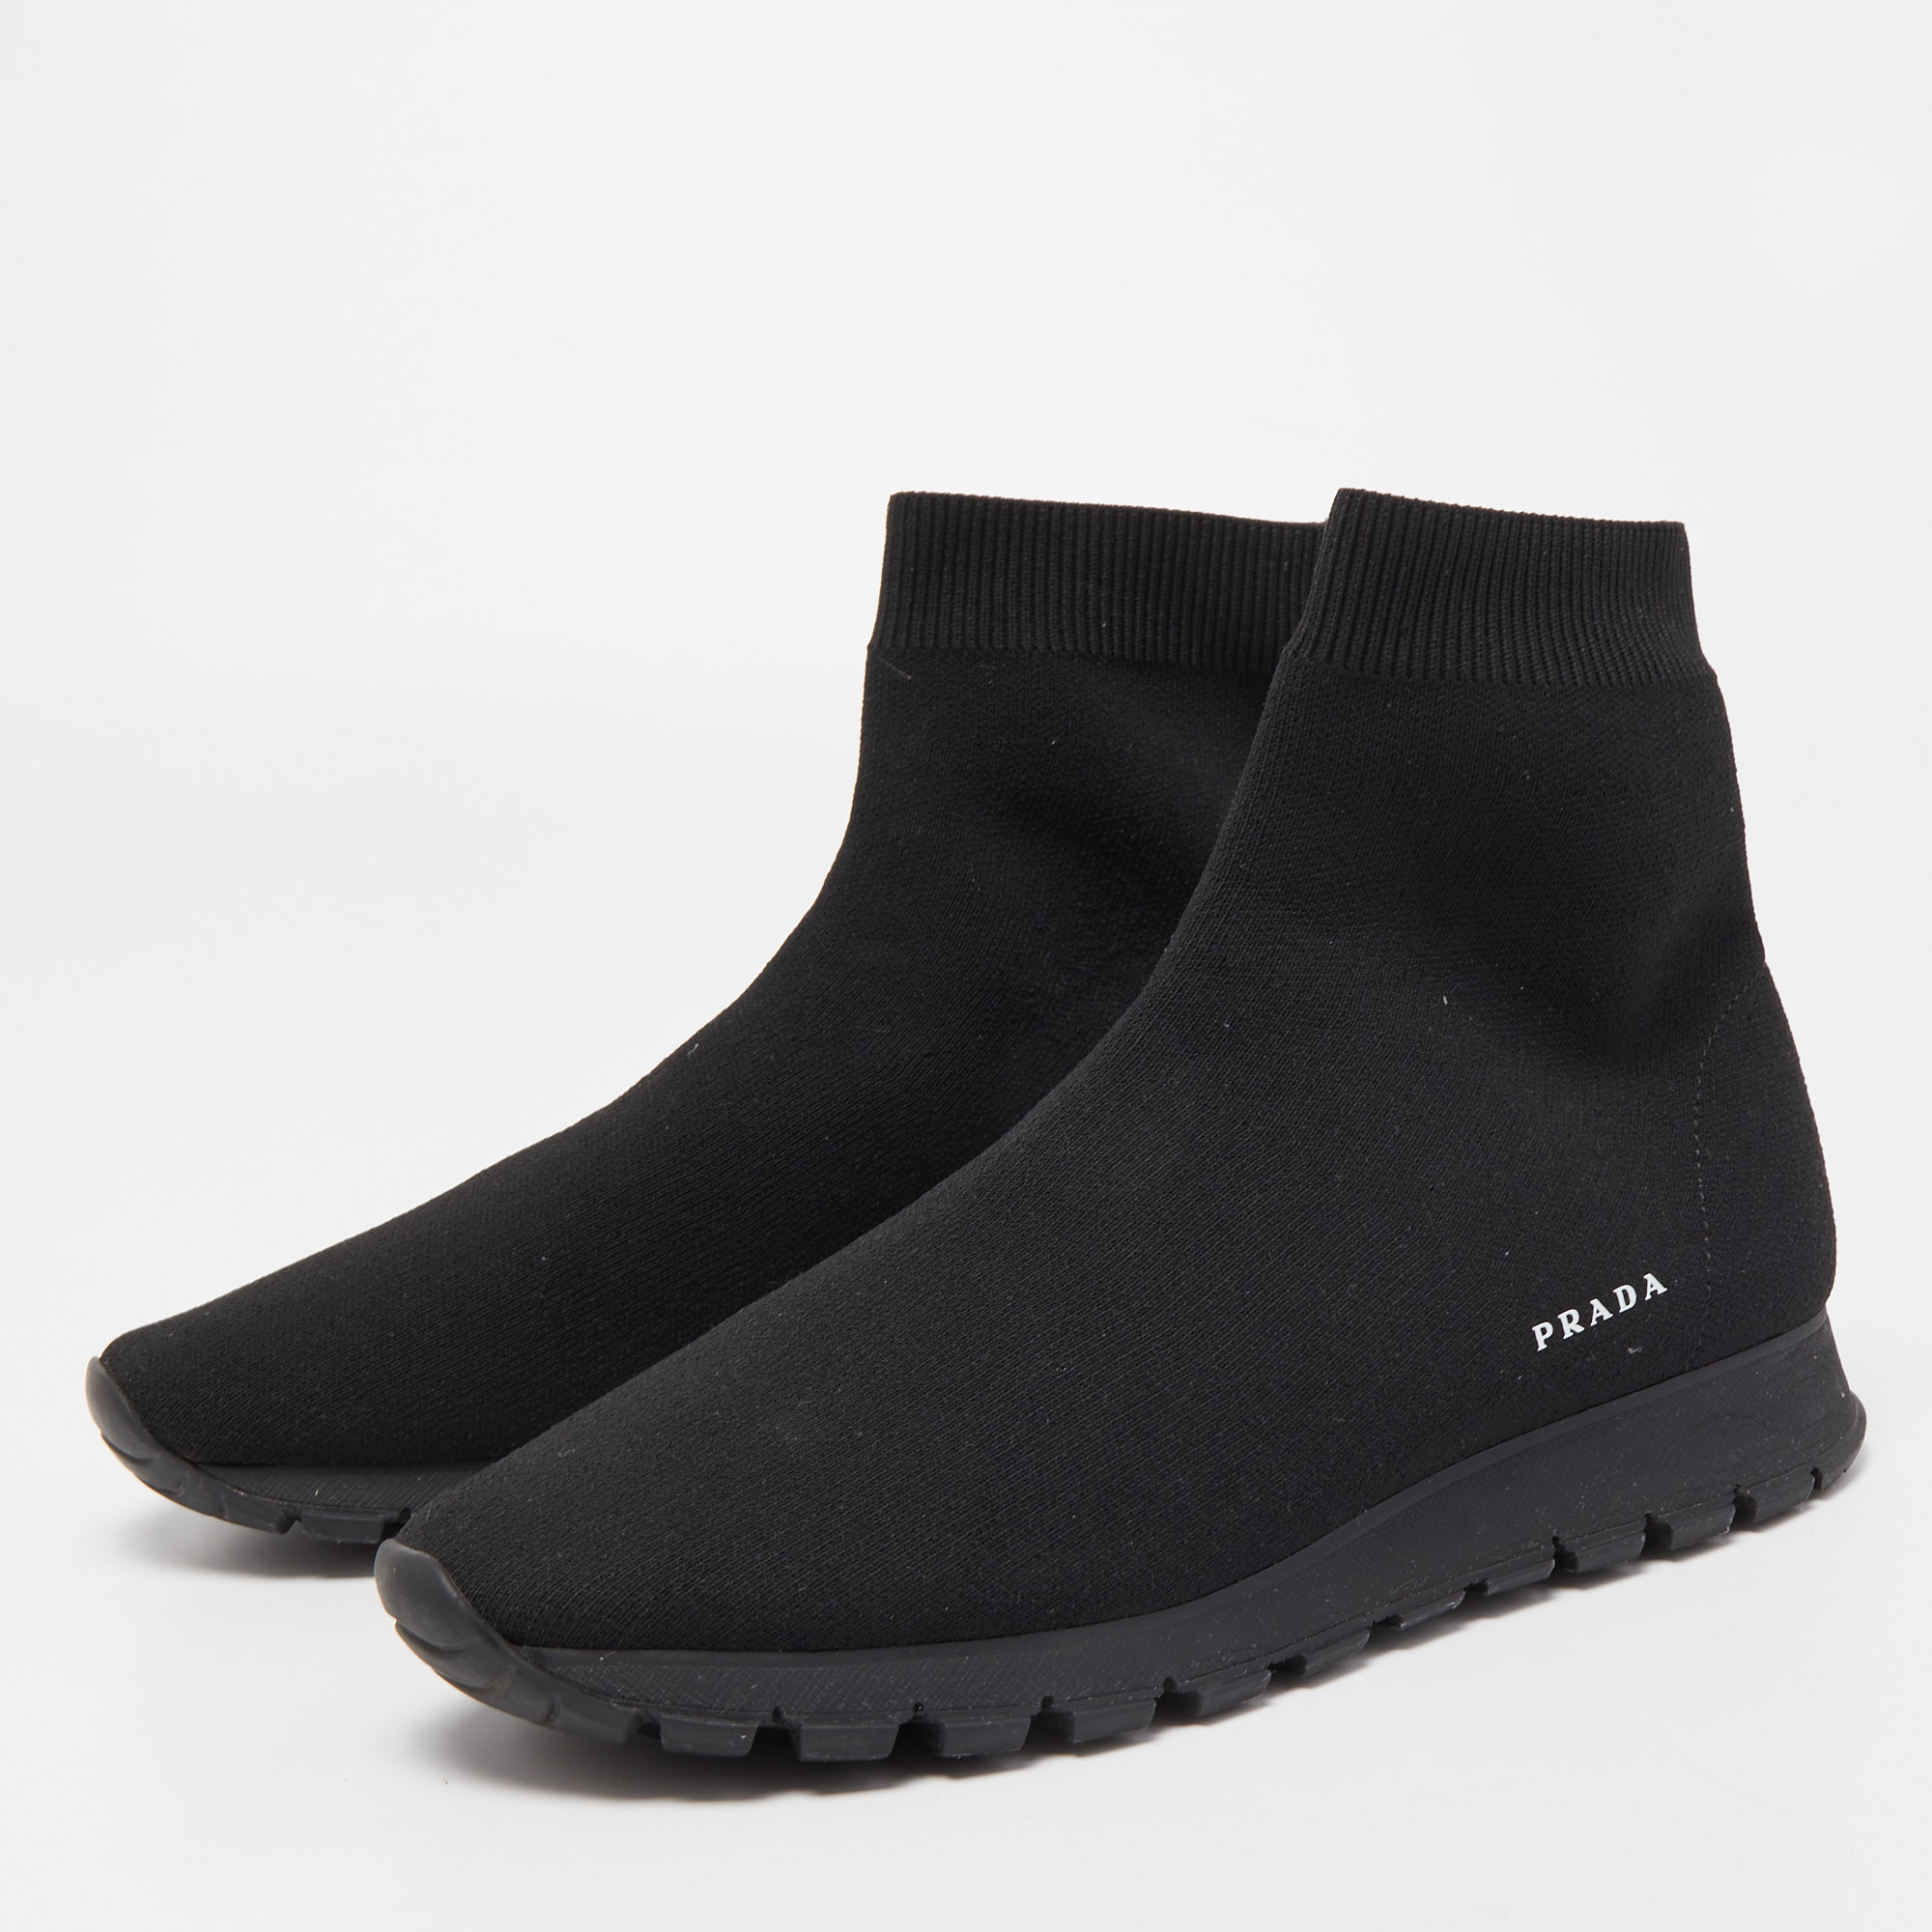 

Prada Black Knit Fabric Sock Runner High Top Sneakers Size